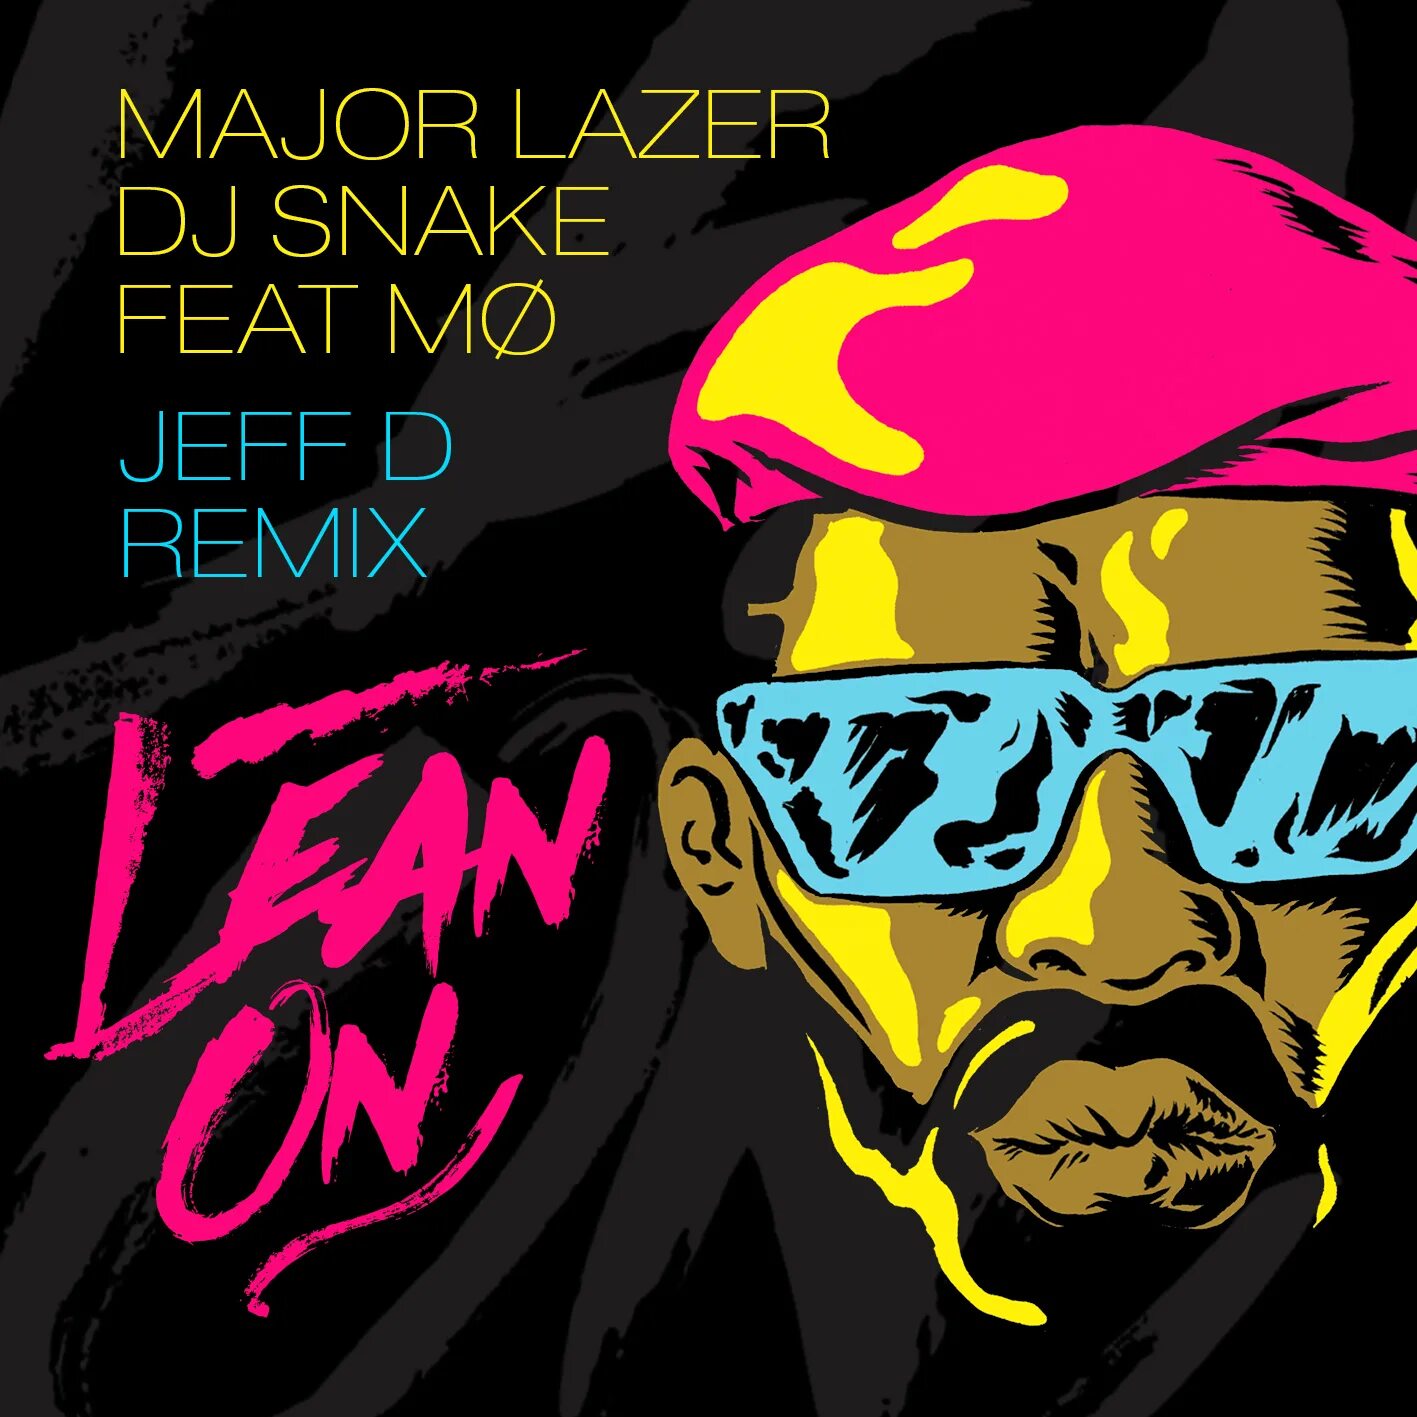 Dj snake feat. DJ Major Lazer. Major Lazer DJ Snake mo. Major Lazer обложка. Major Lazer x DJ Snake Lean on.